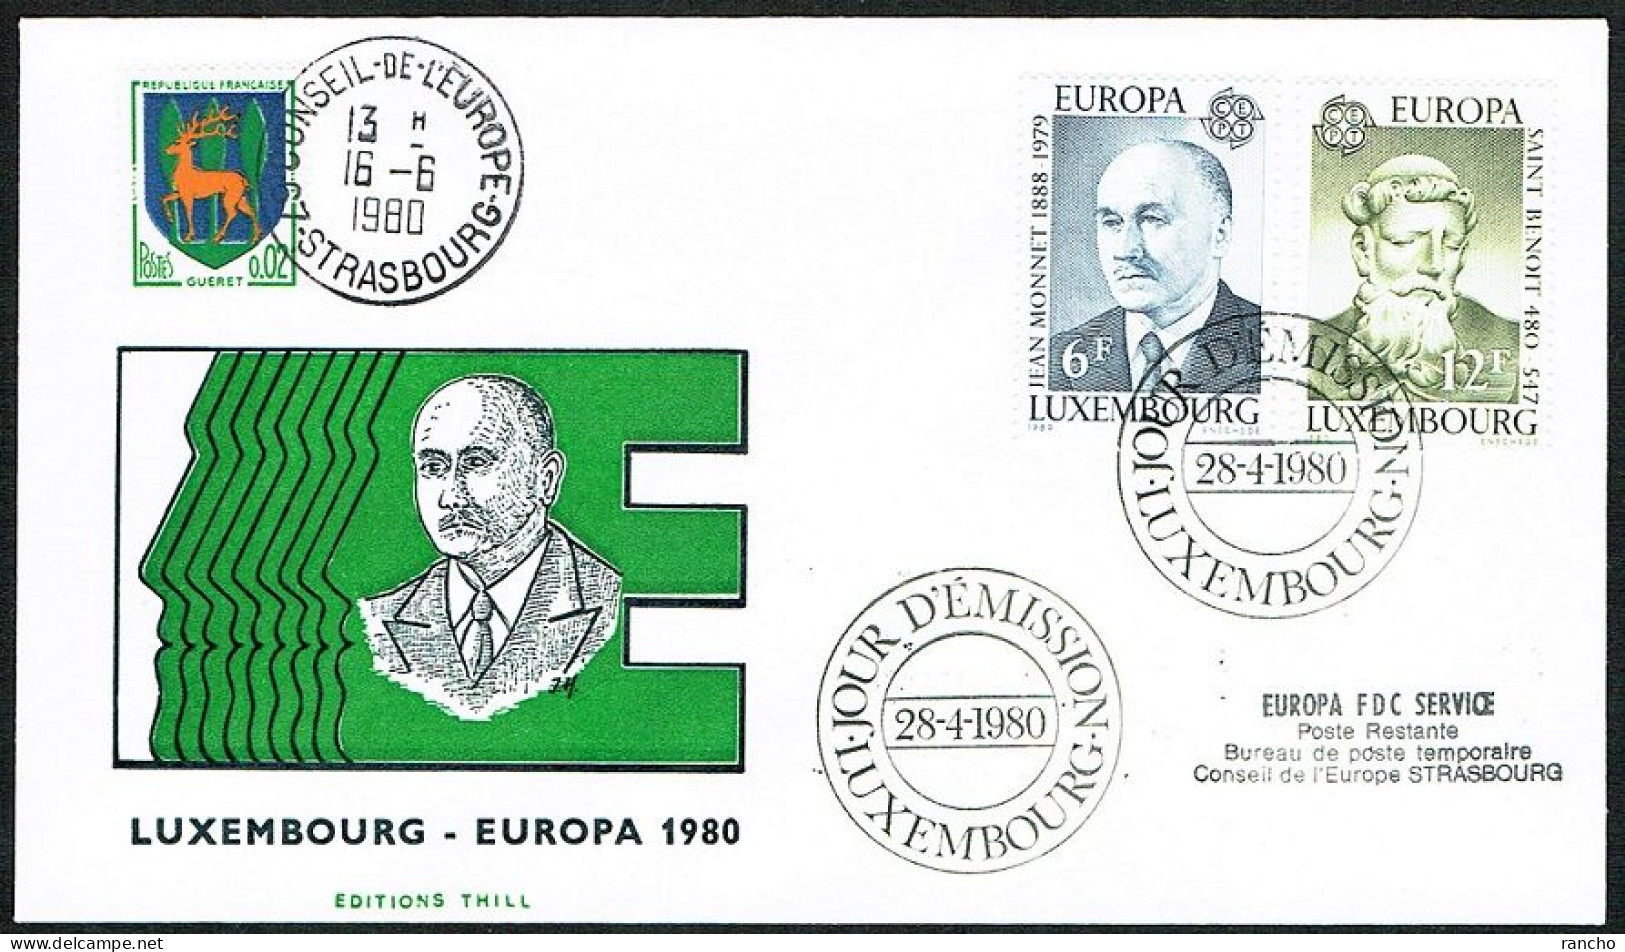 EUROPA FDC SERVICE . TIRAGE LIMITE Nr:60/20. DU CONSEIL DE L'EUROPE STRASBOURG. LUXEMBOURG.28.4.1980. - Covers & Documents